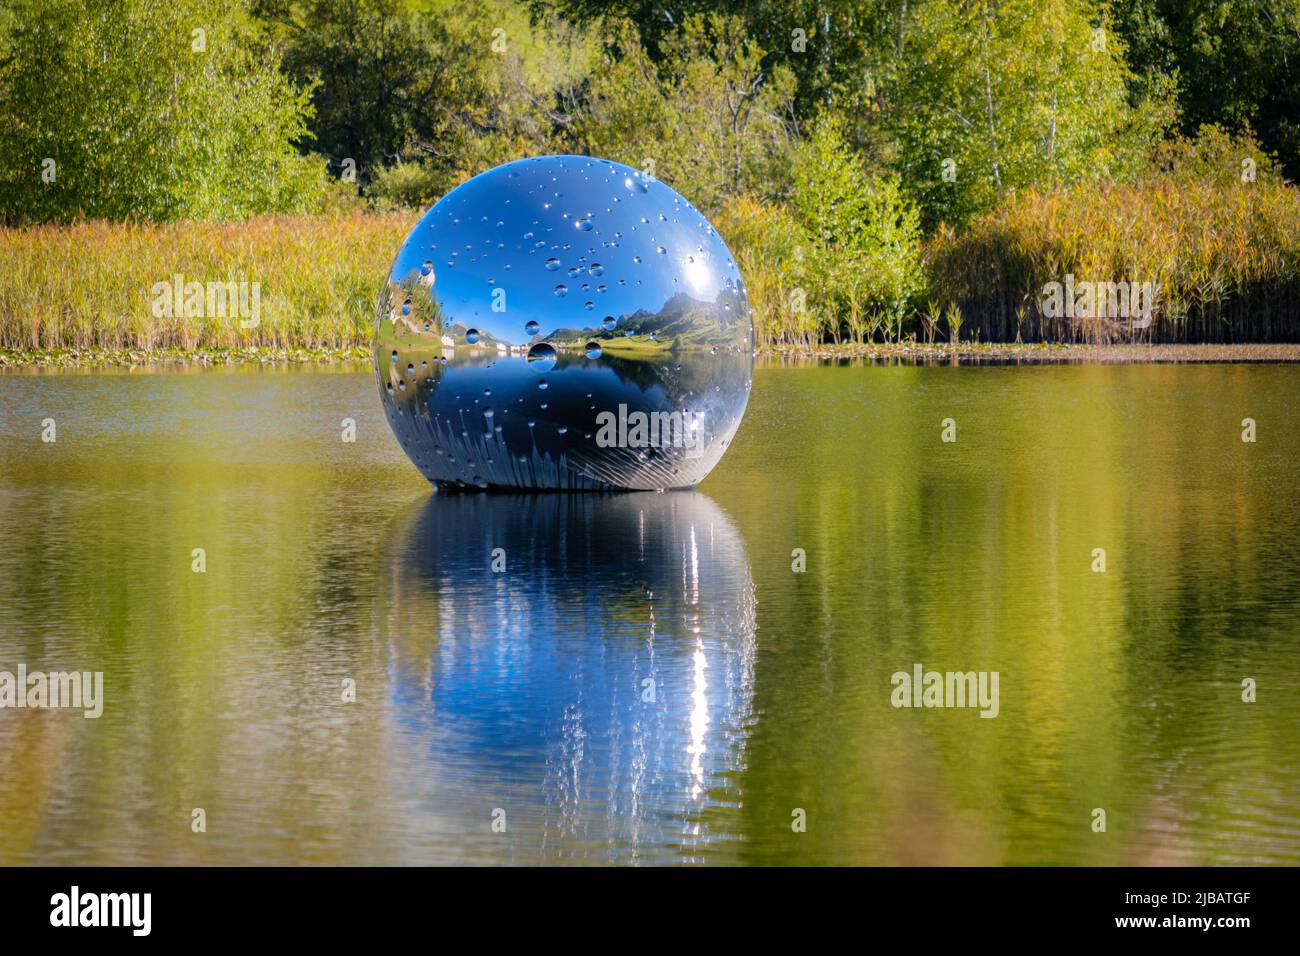 Taraspsee, Suiza - 24 de septiembre de 2022: La bola de metal flotante en Taraspsee (Grisons, Suiza) es una obra de arte del artista suizo Not Vital. Foto de stock